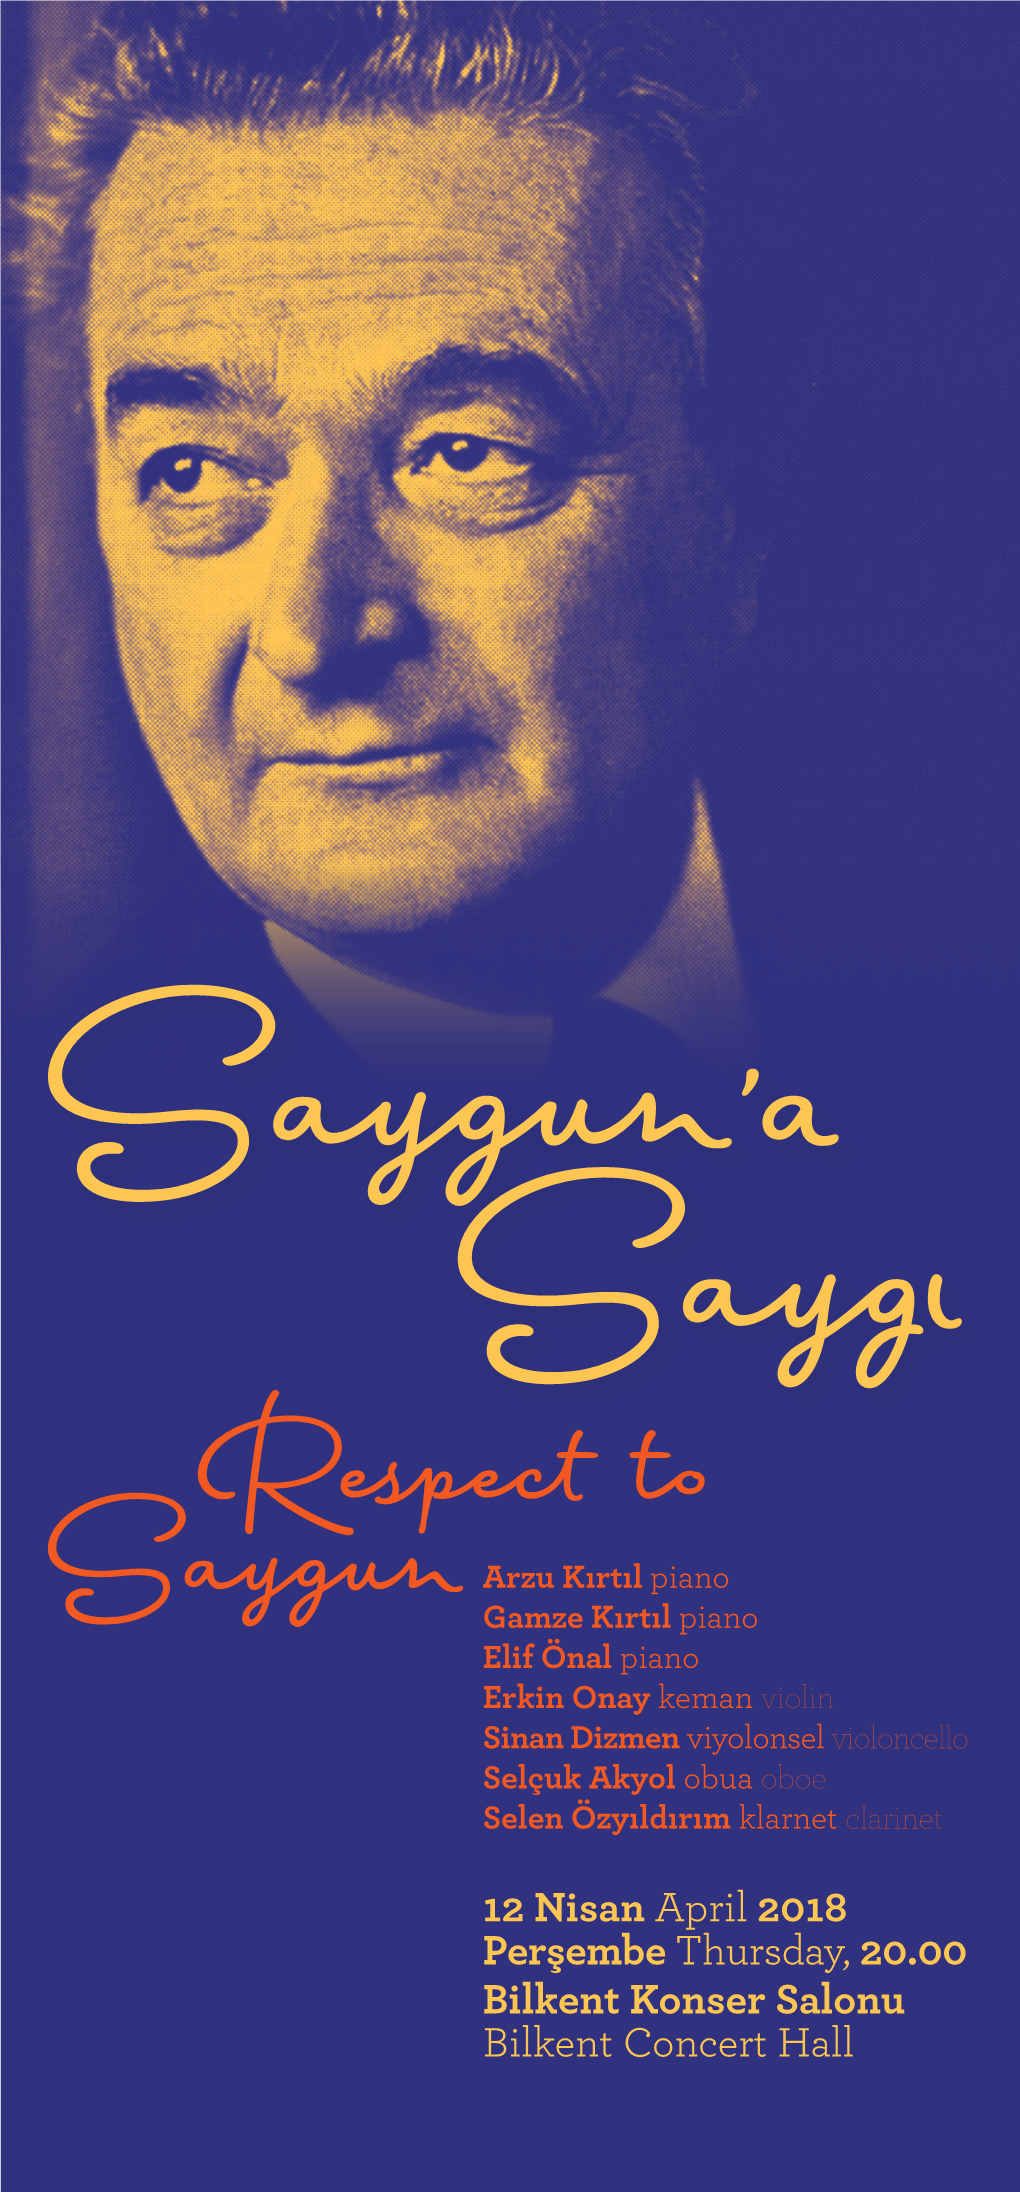 Respect to Saygun